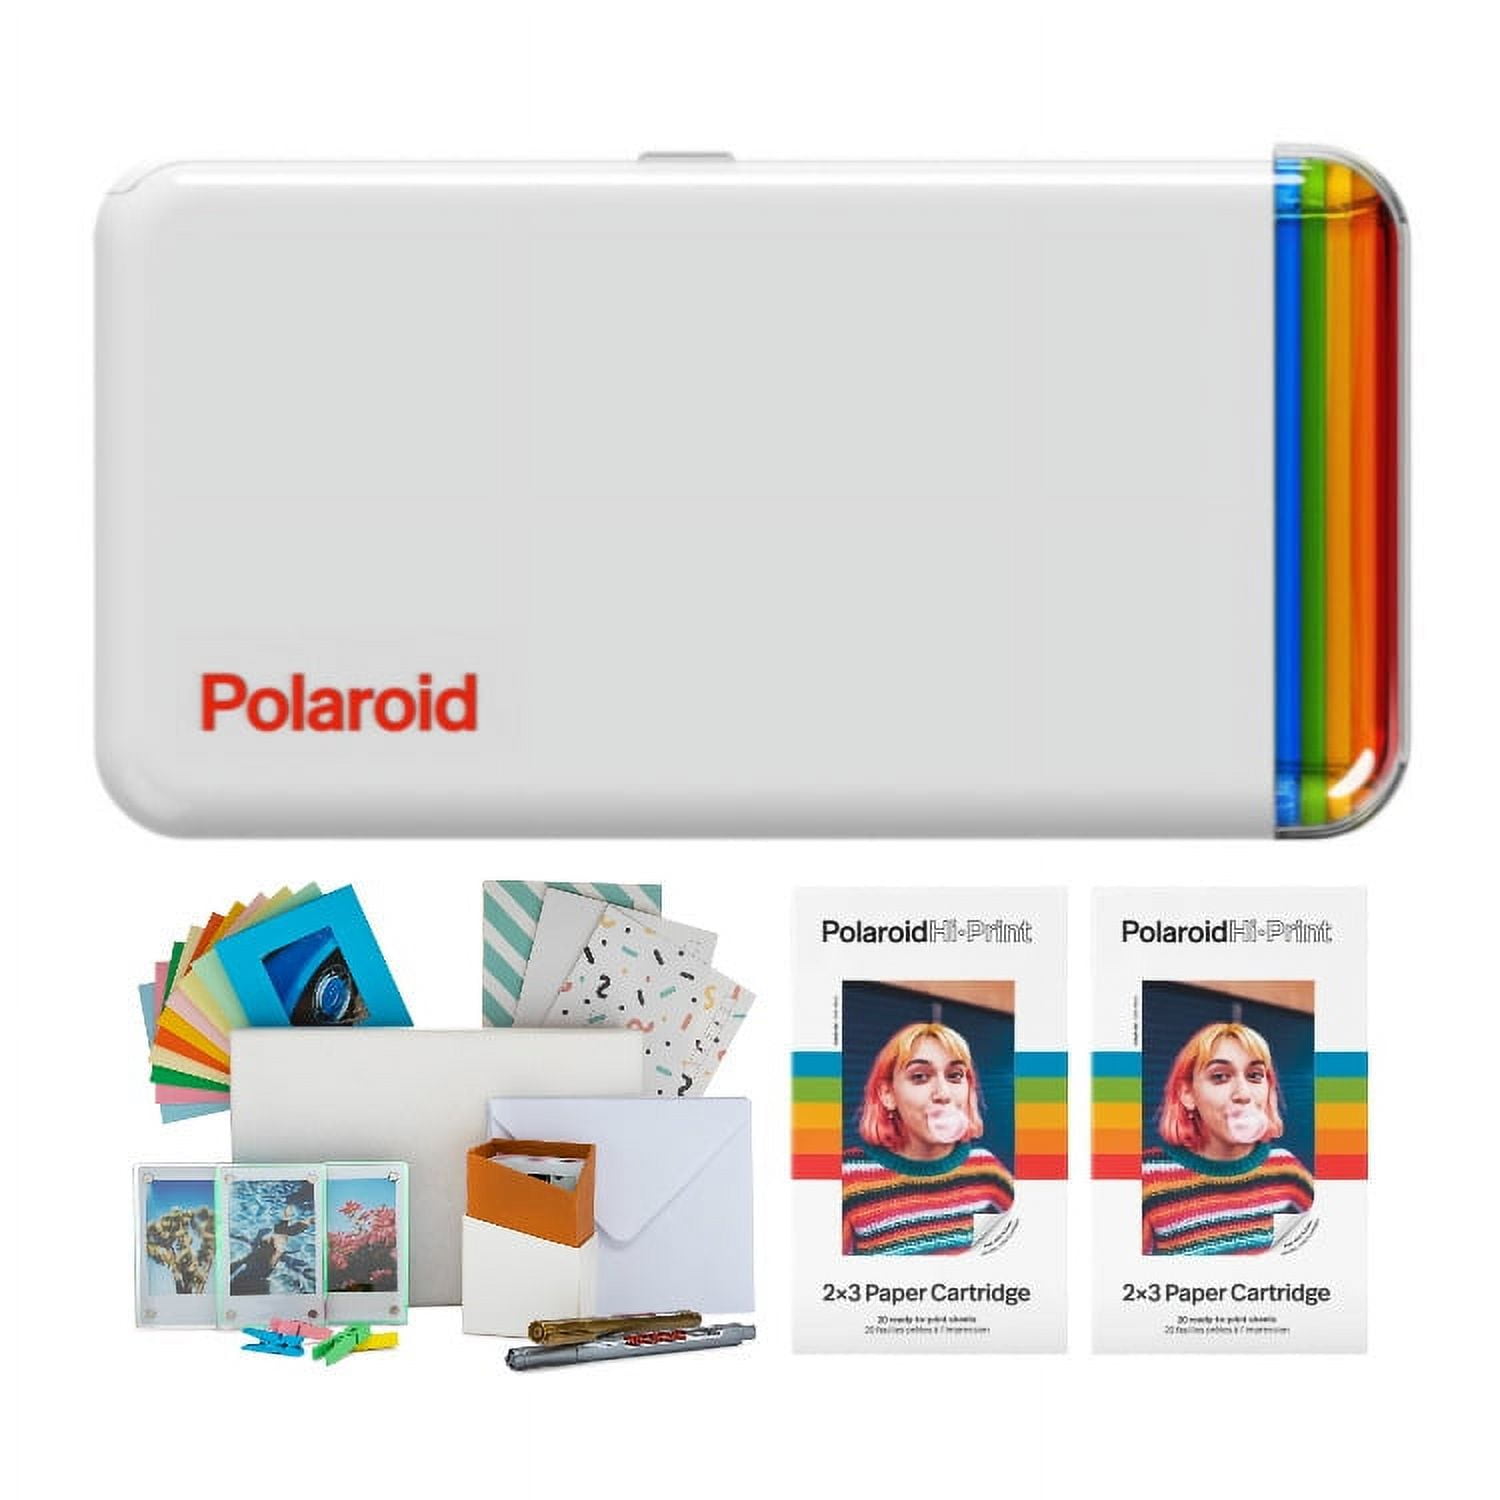 Polaroid Hi-Print Paper